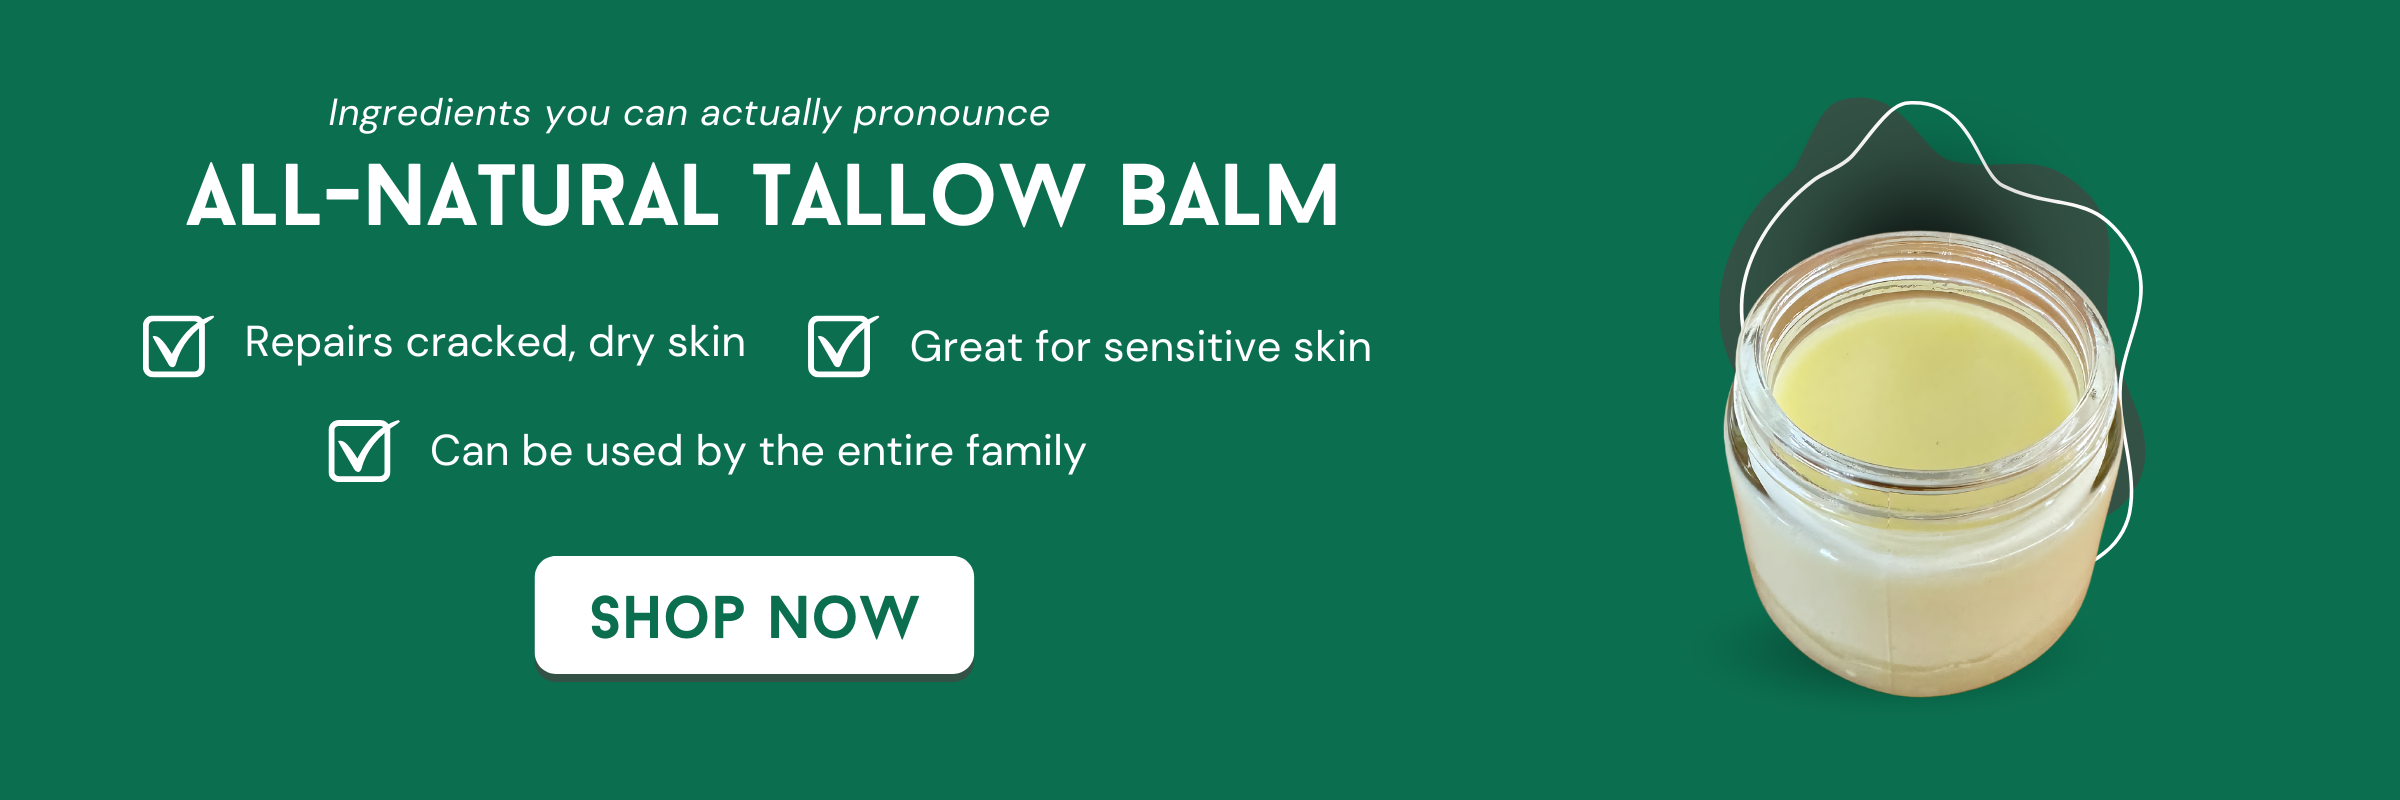 tallow balm